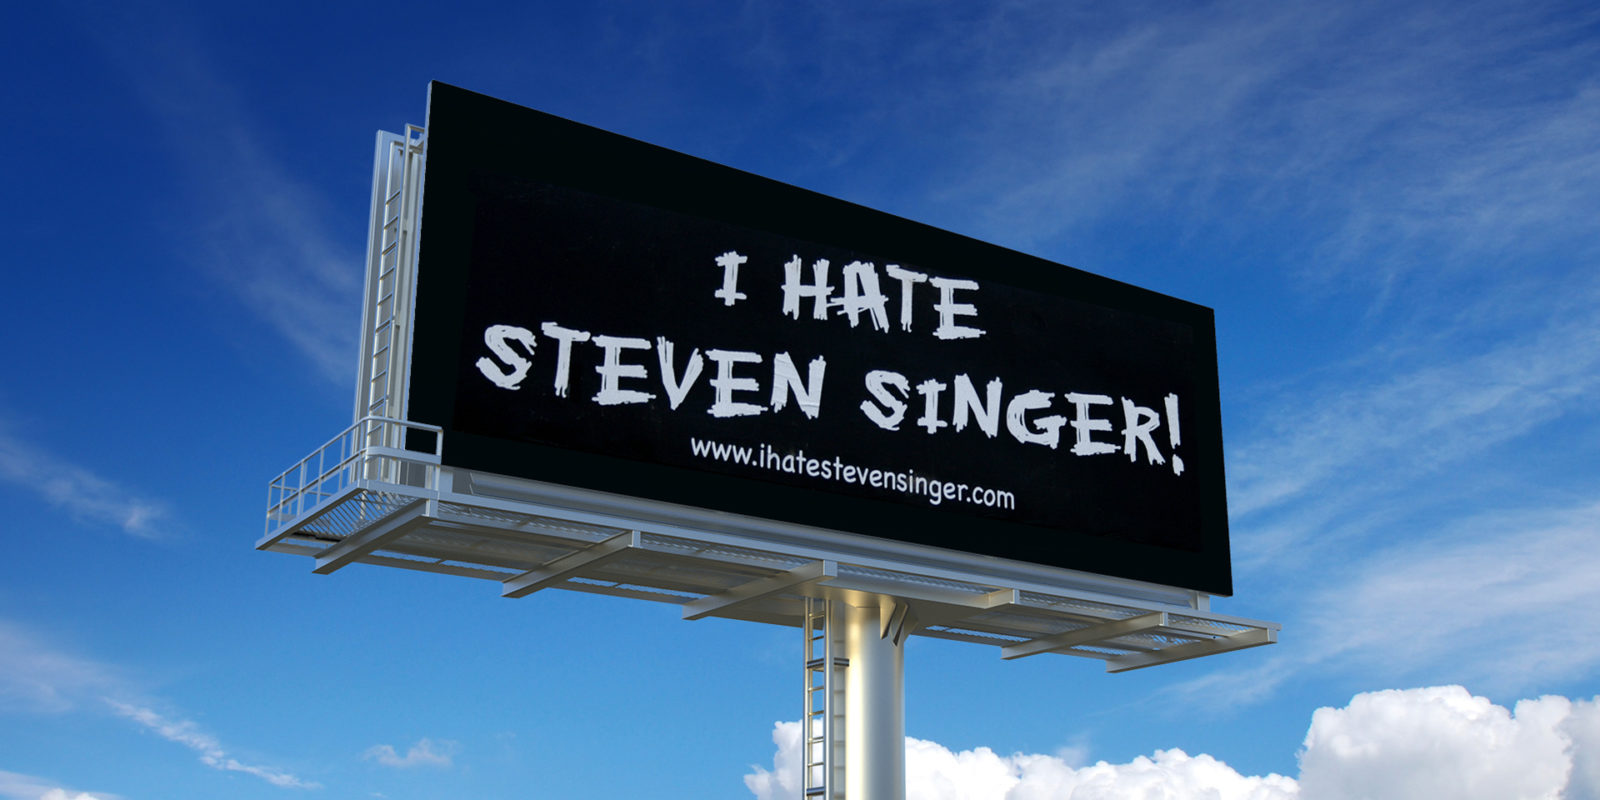 Steven Singer billboard